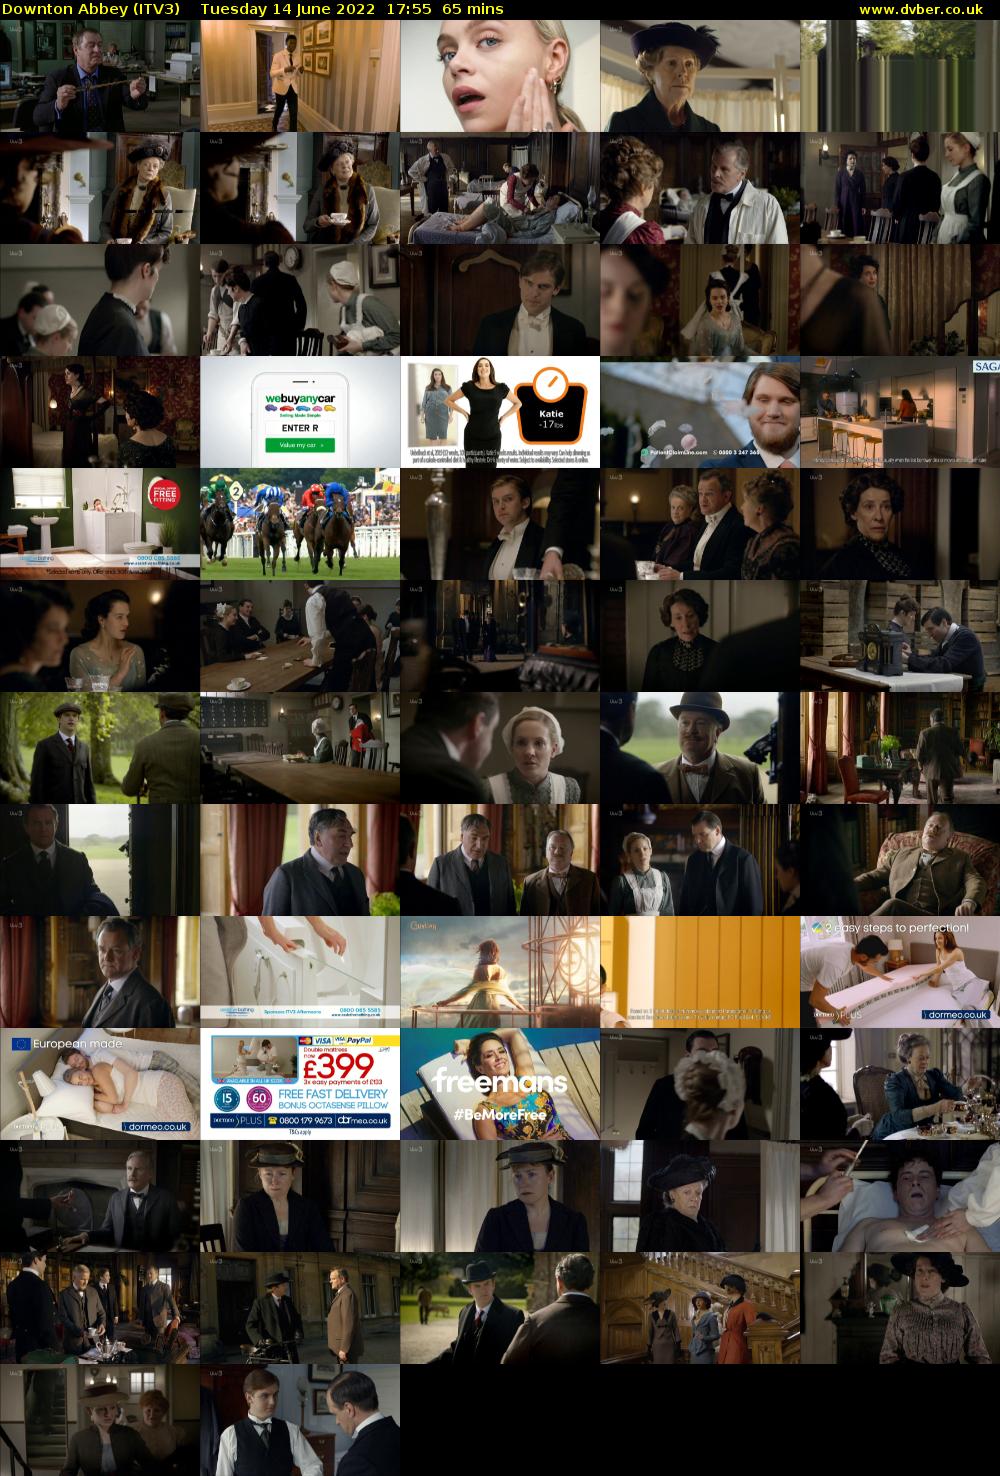 Downton Abbey (ITV3) Tuesday 14 June 2022 17:55 - 19:00